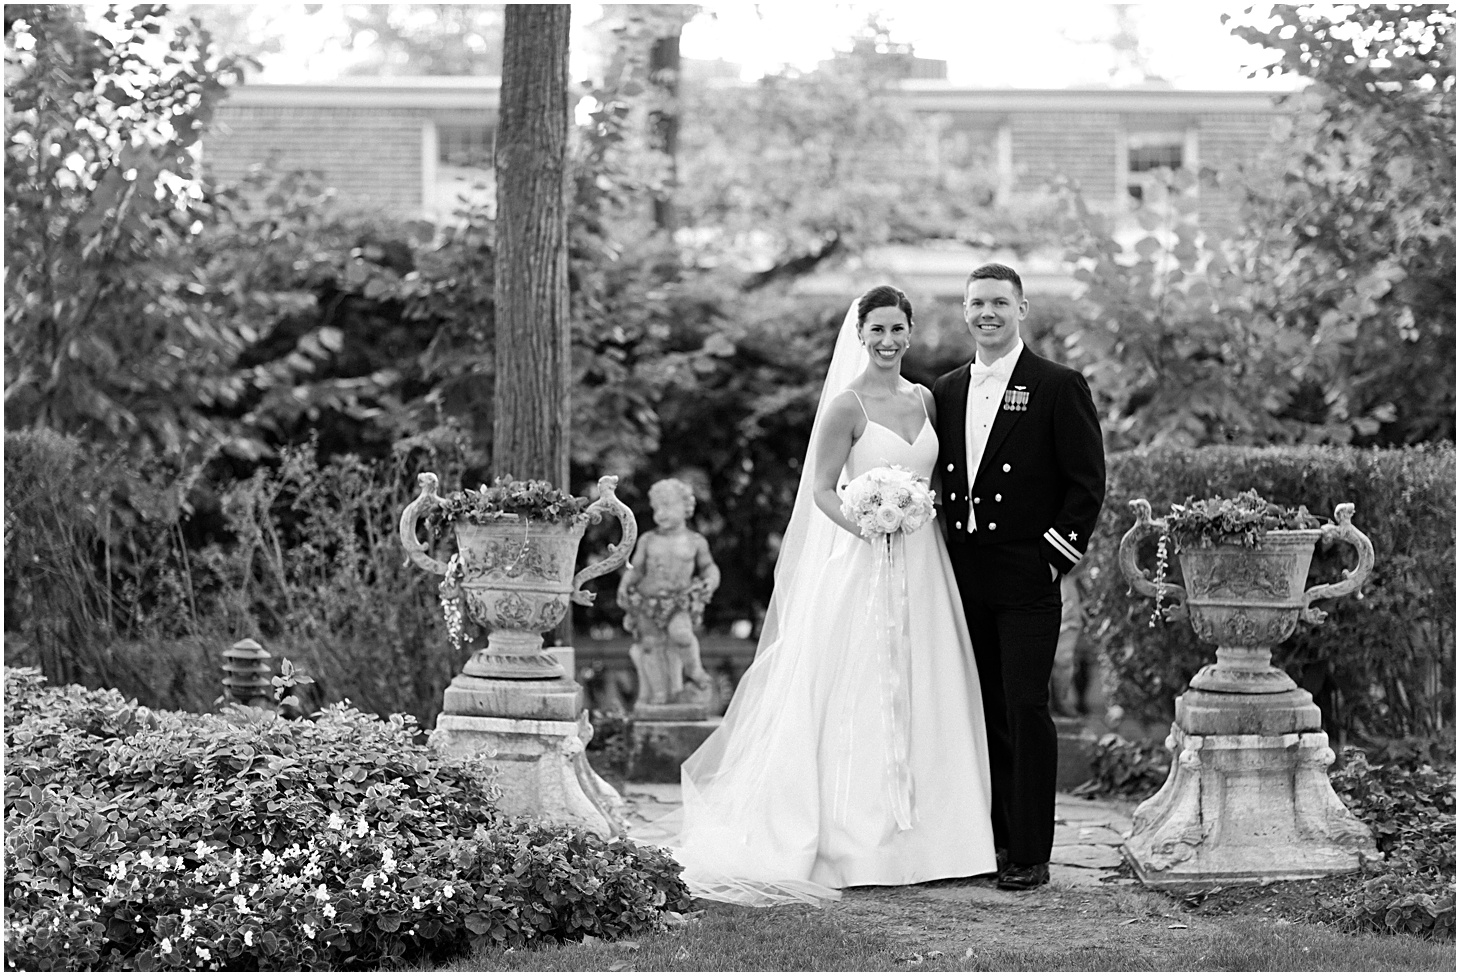 Black & White portrait - A Thoroughly Washingtonian Wedding at Meridian House in DC by Sarah Bradshaw 